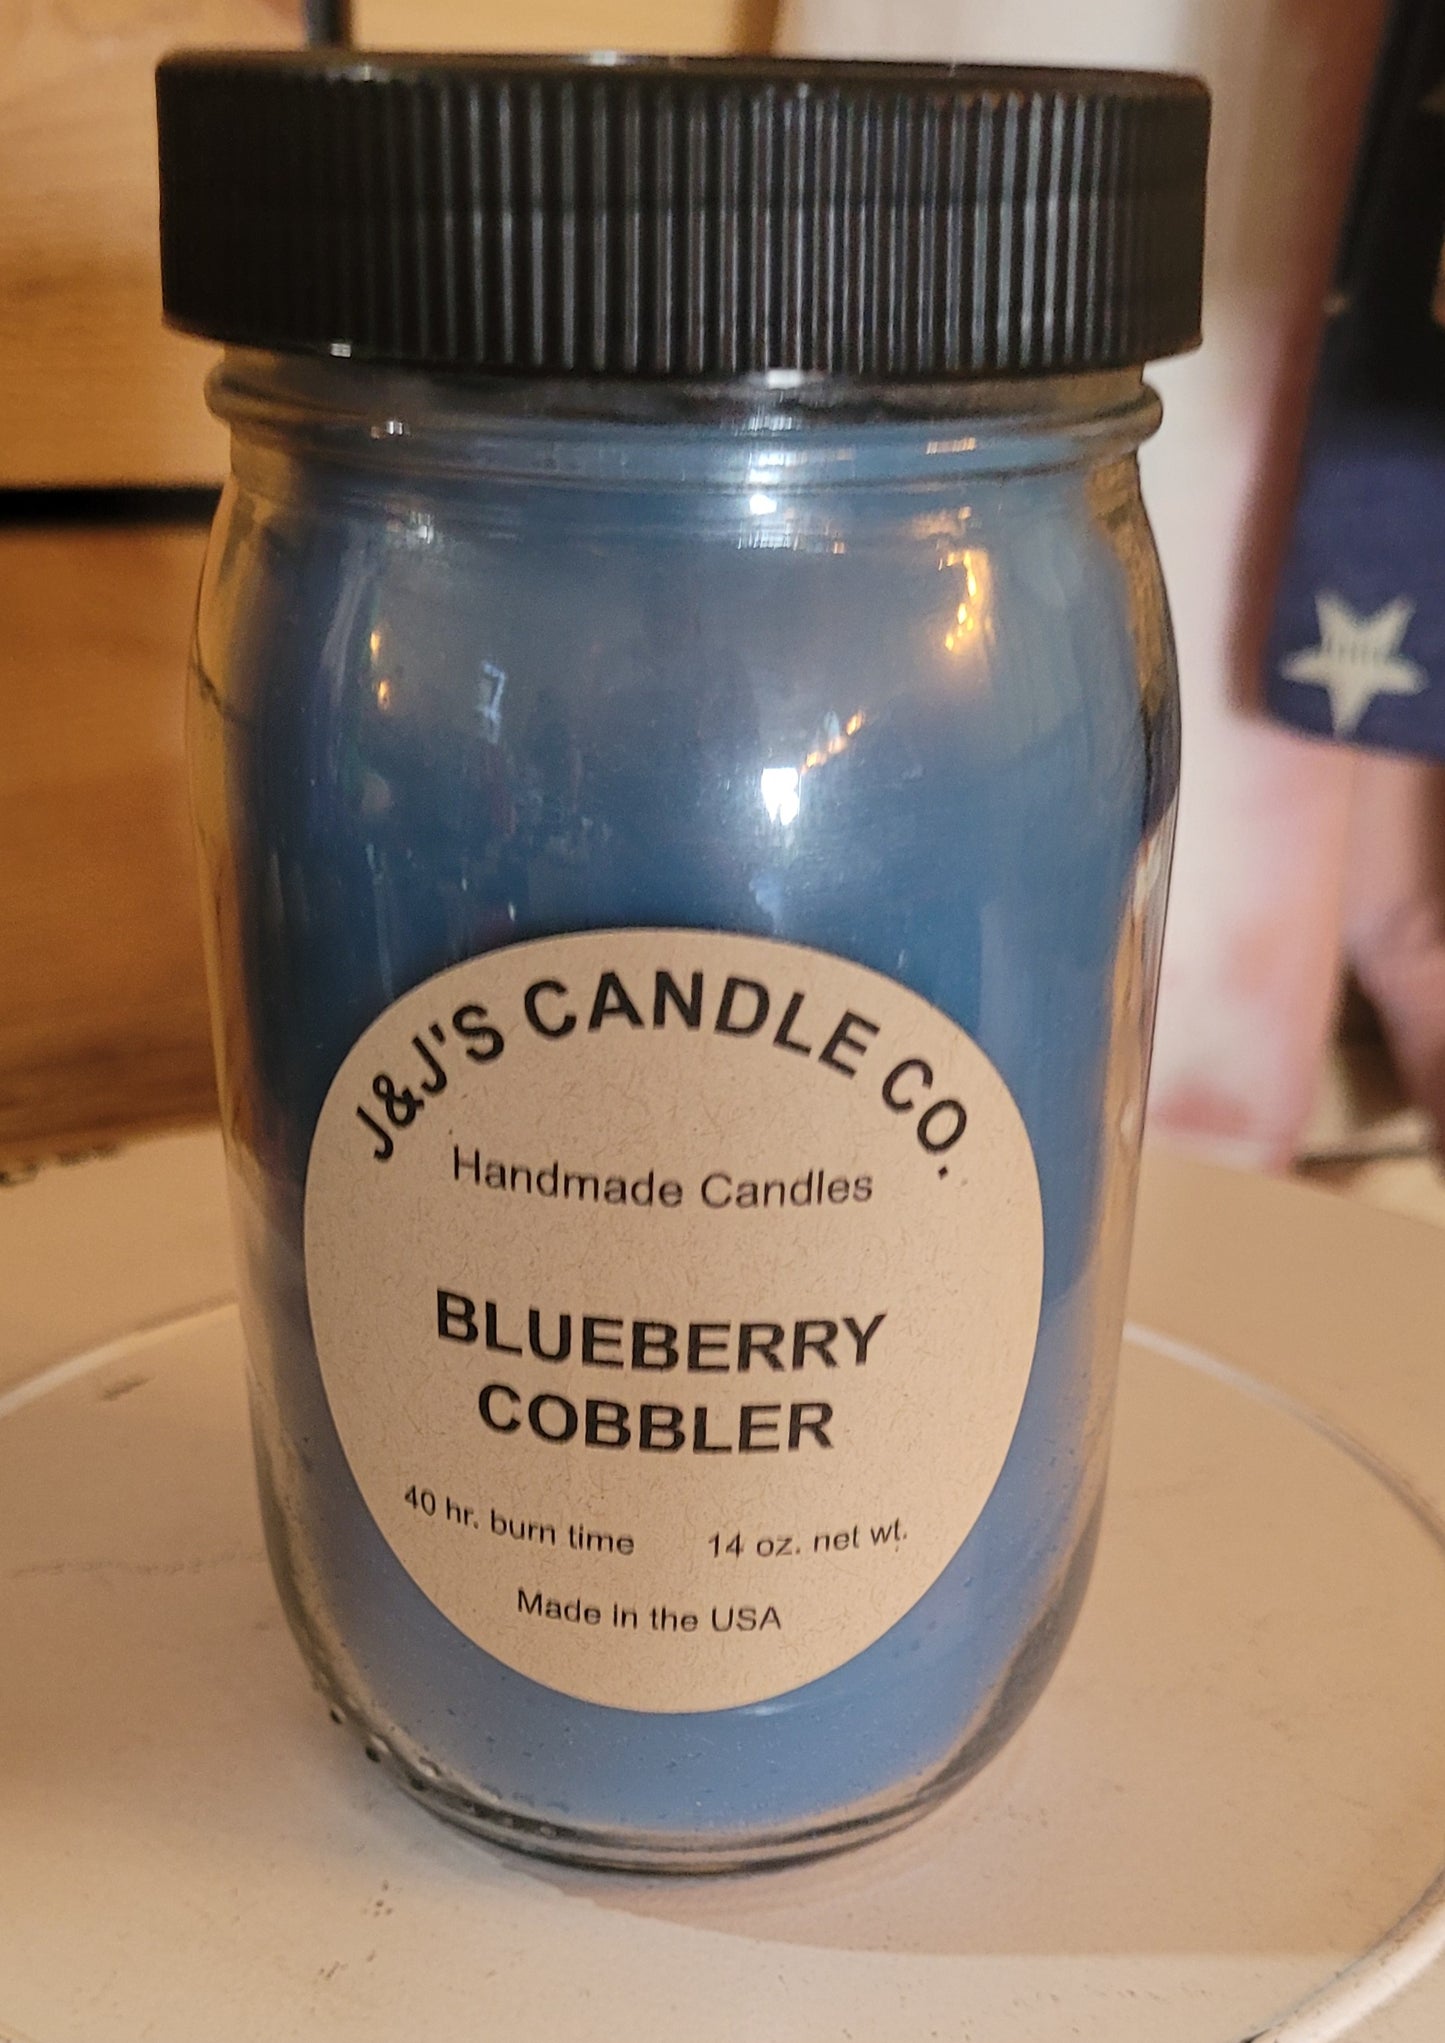 J&J's Candle Co. Blueberry Cobbler